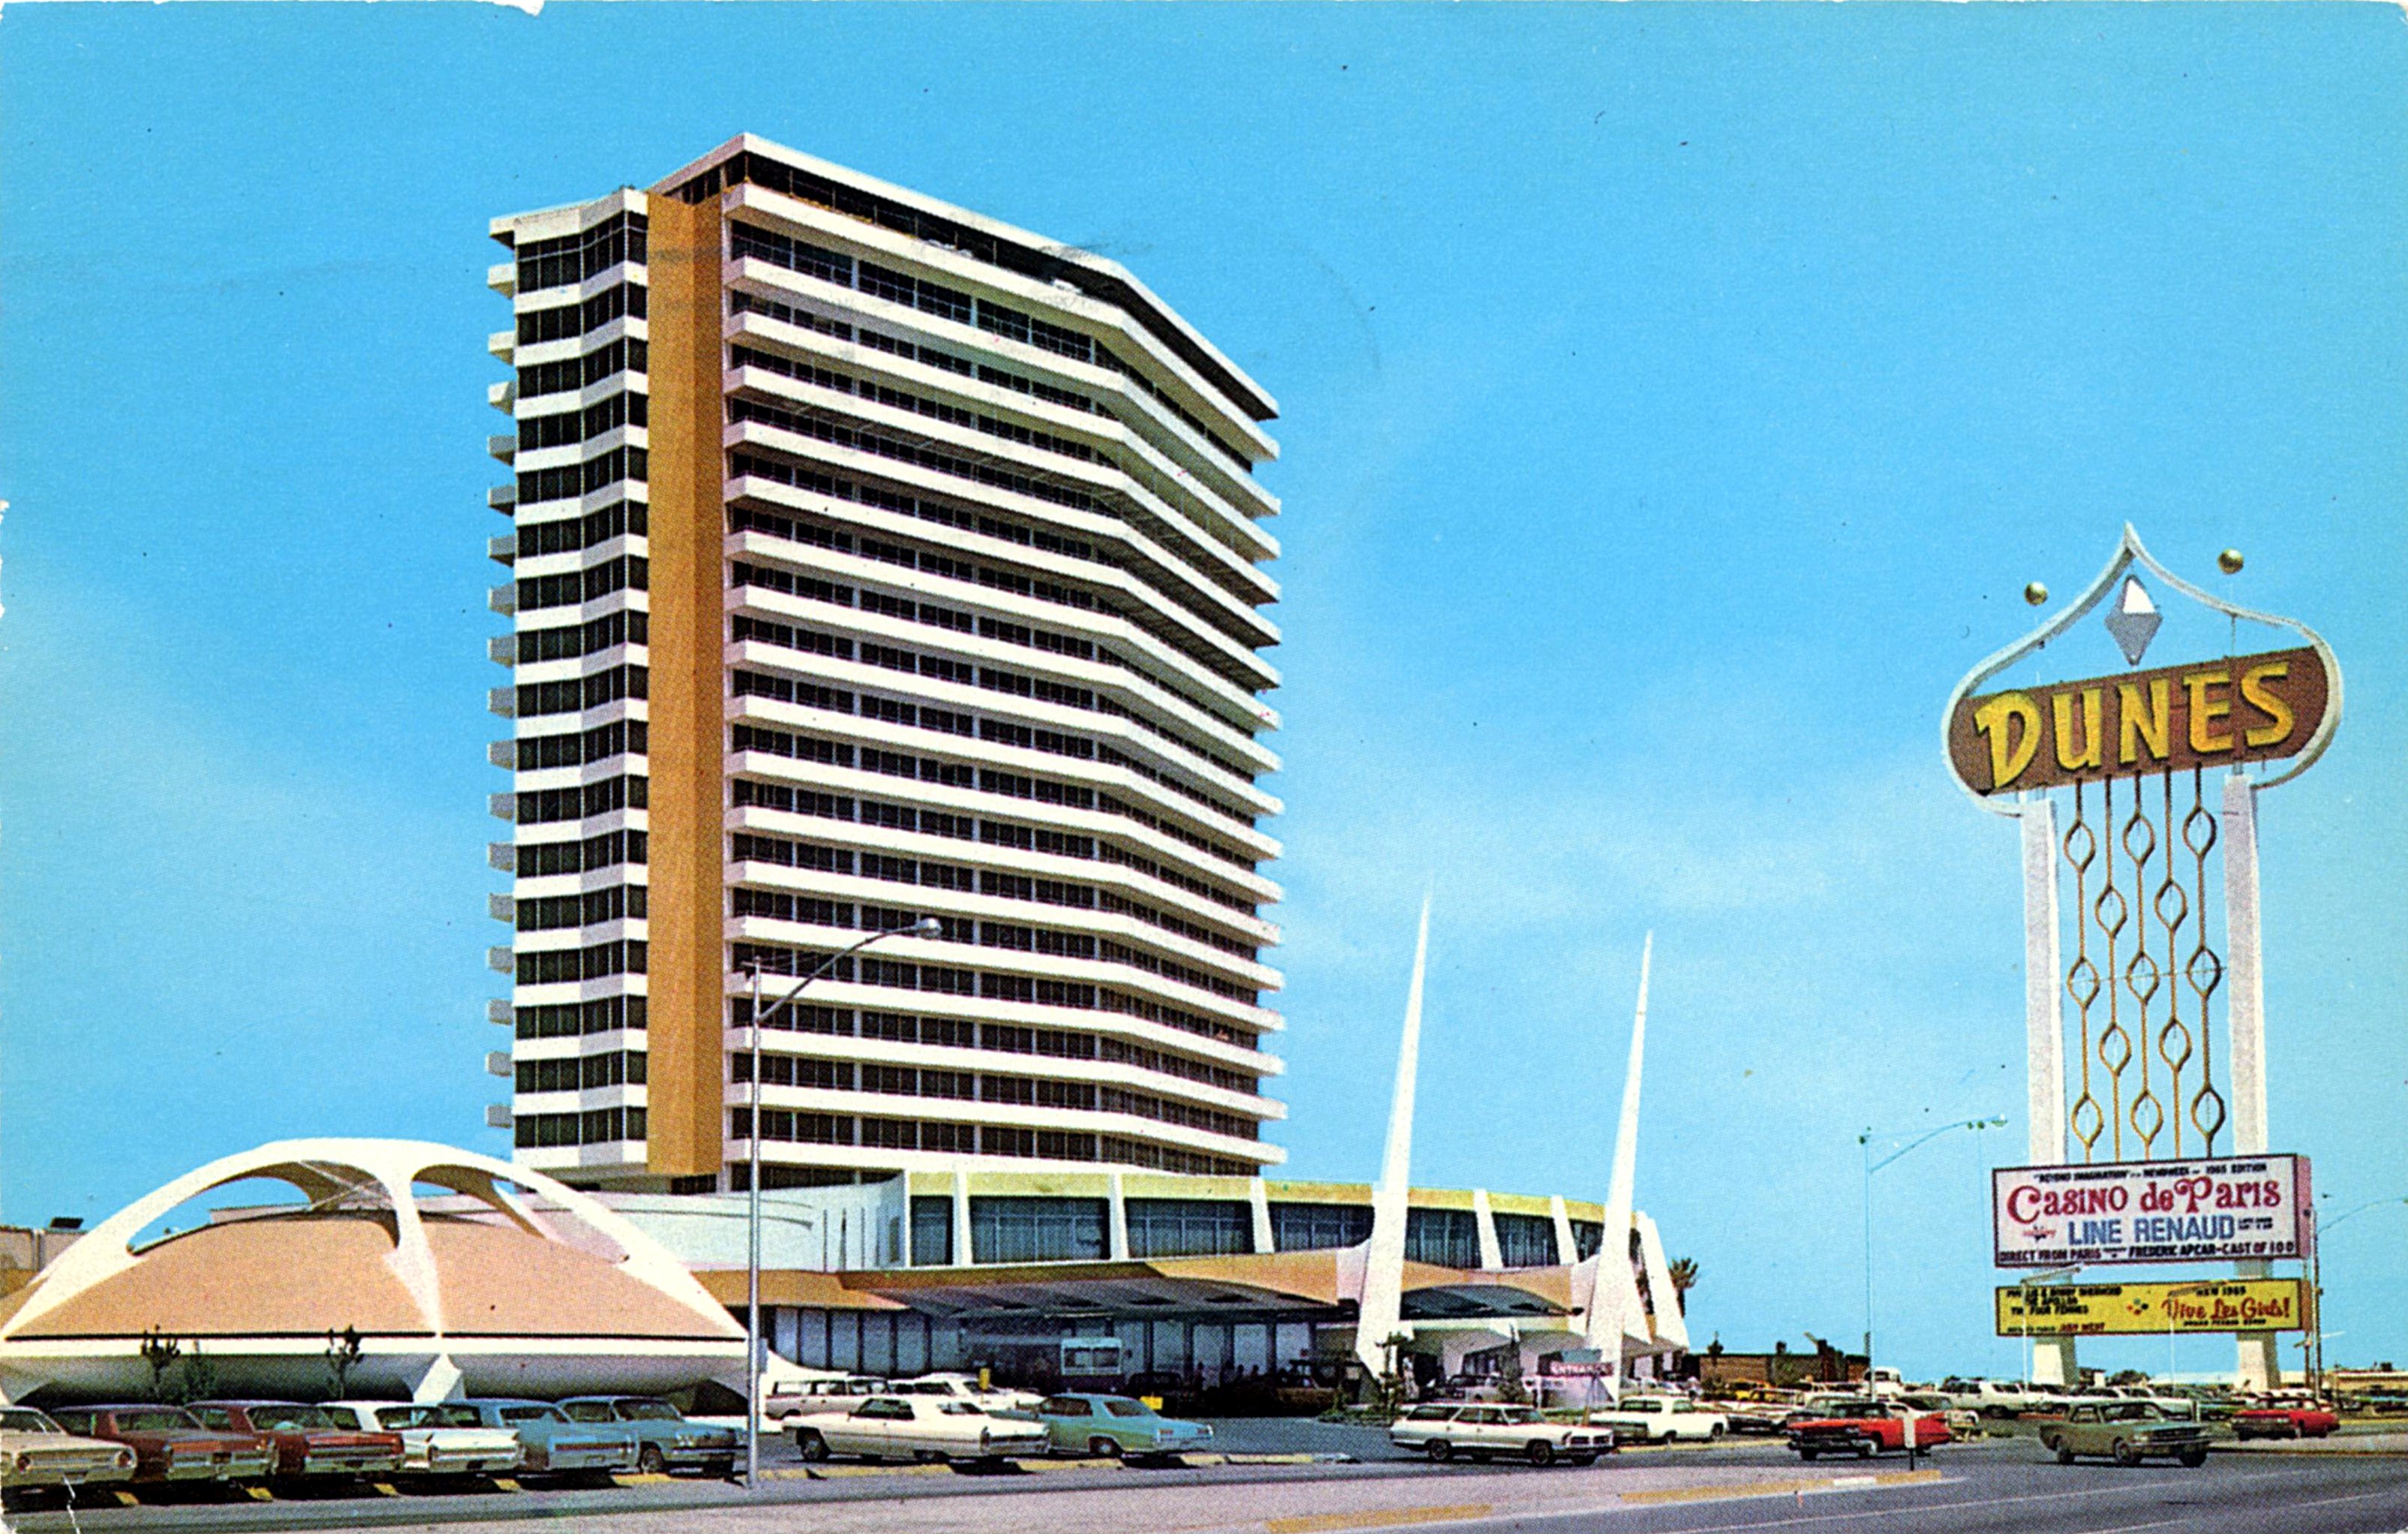 The Dunes Hotel - Las Vegas, Nevada U.S.A. - 1960's